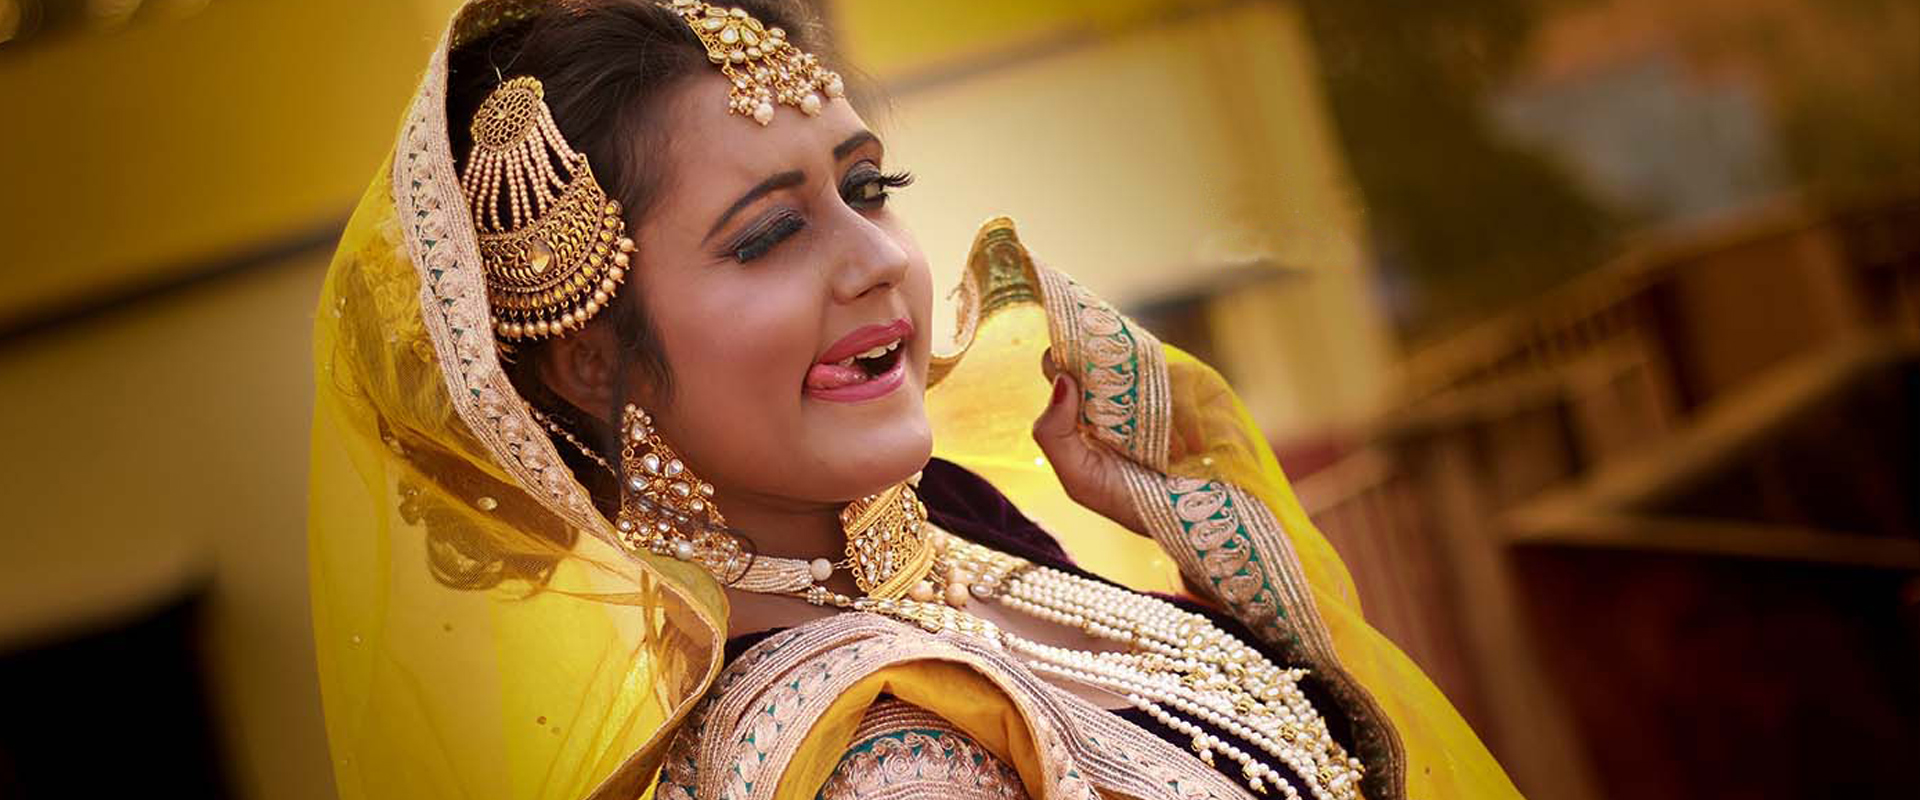 Top 10 Professional Pre-Wedding Photographer In Kolkata